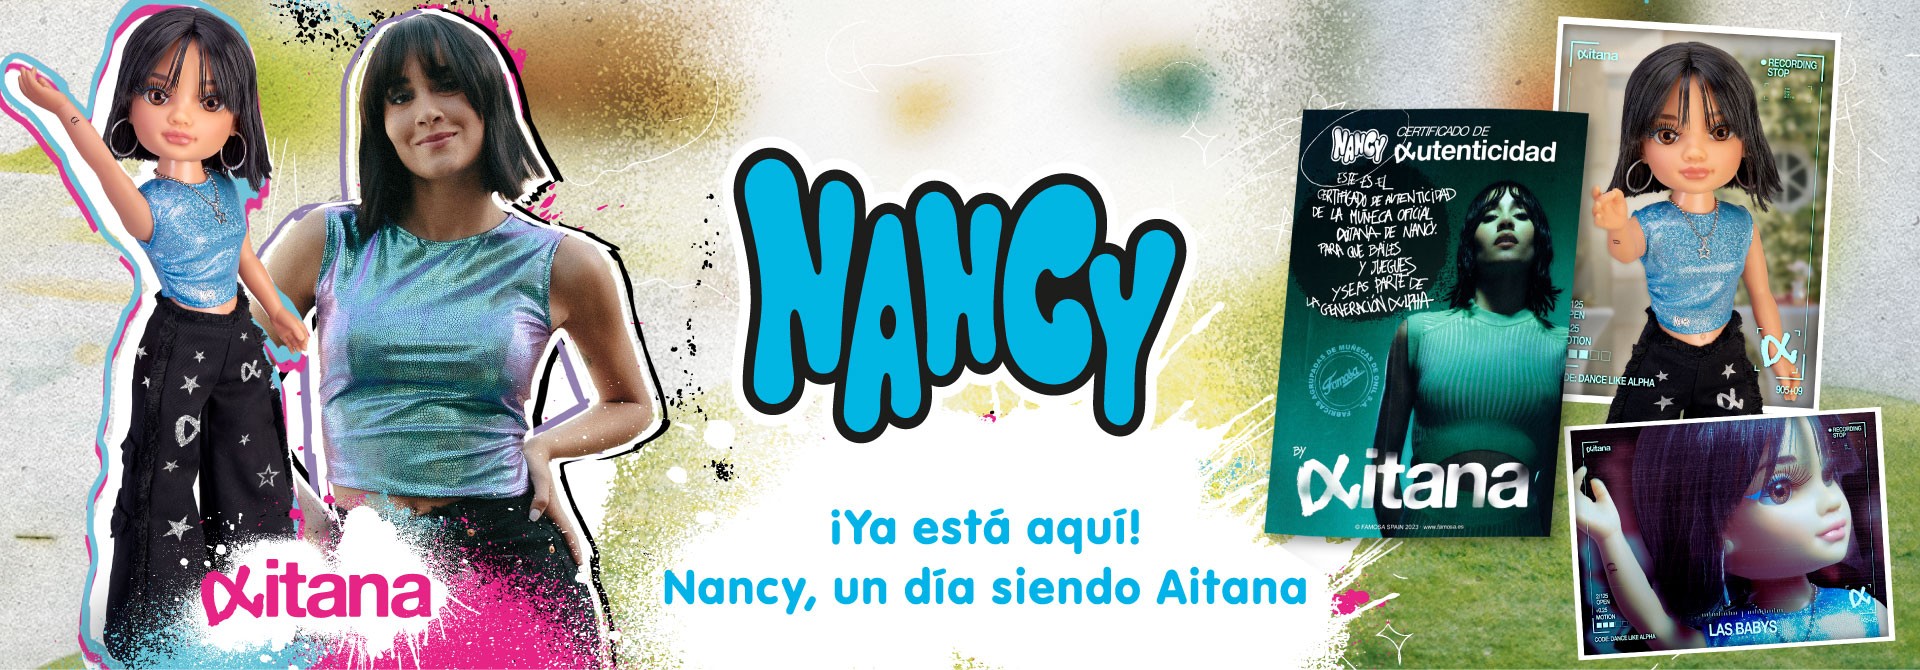 Nancy Aitana